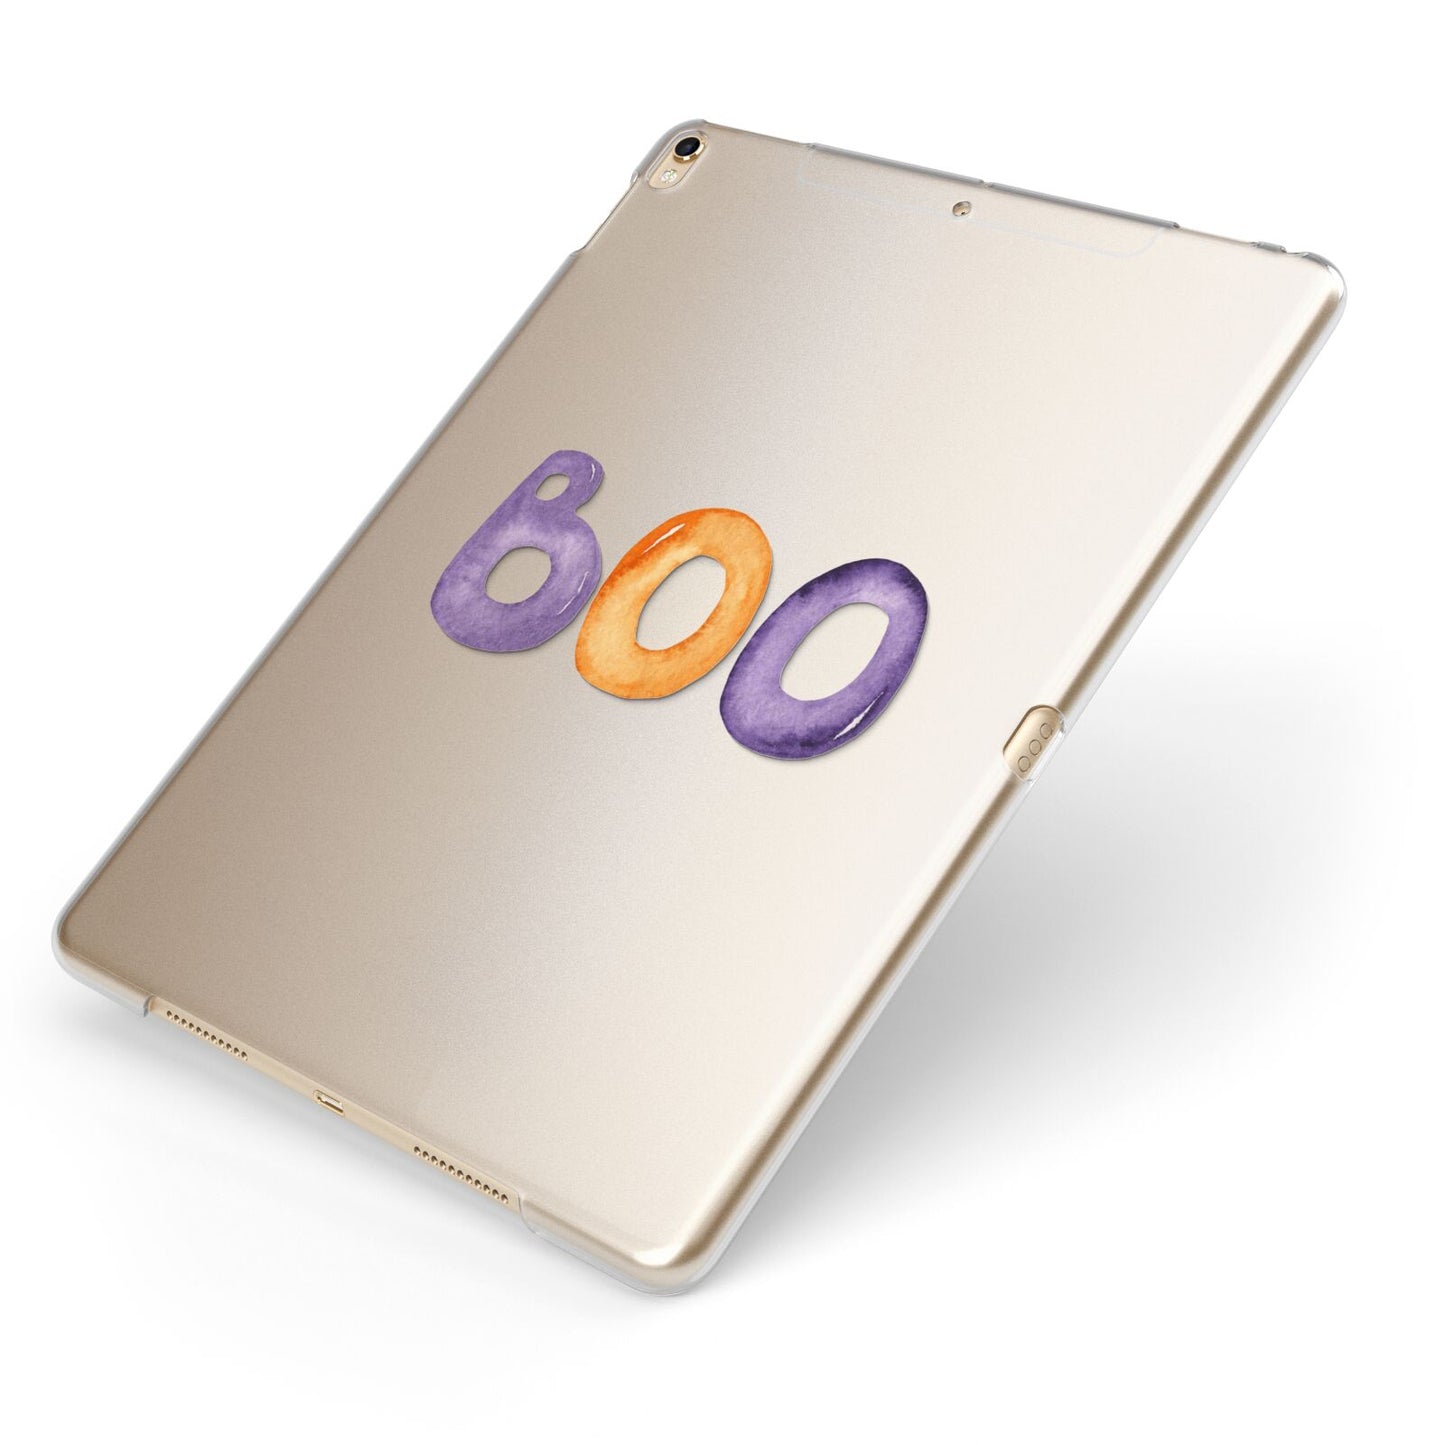 Boo Apple iPad Case on Gold iPad Side View